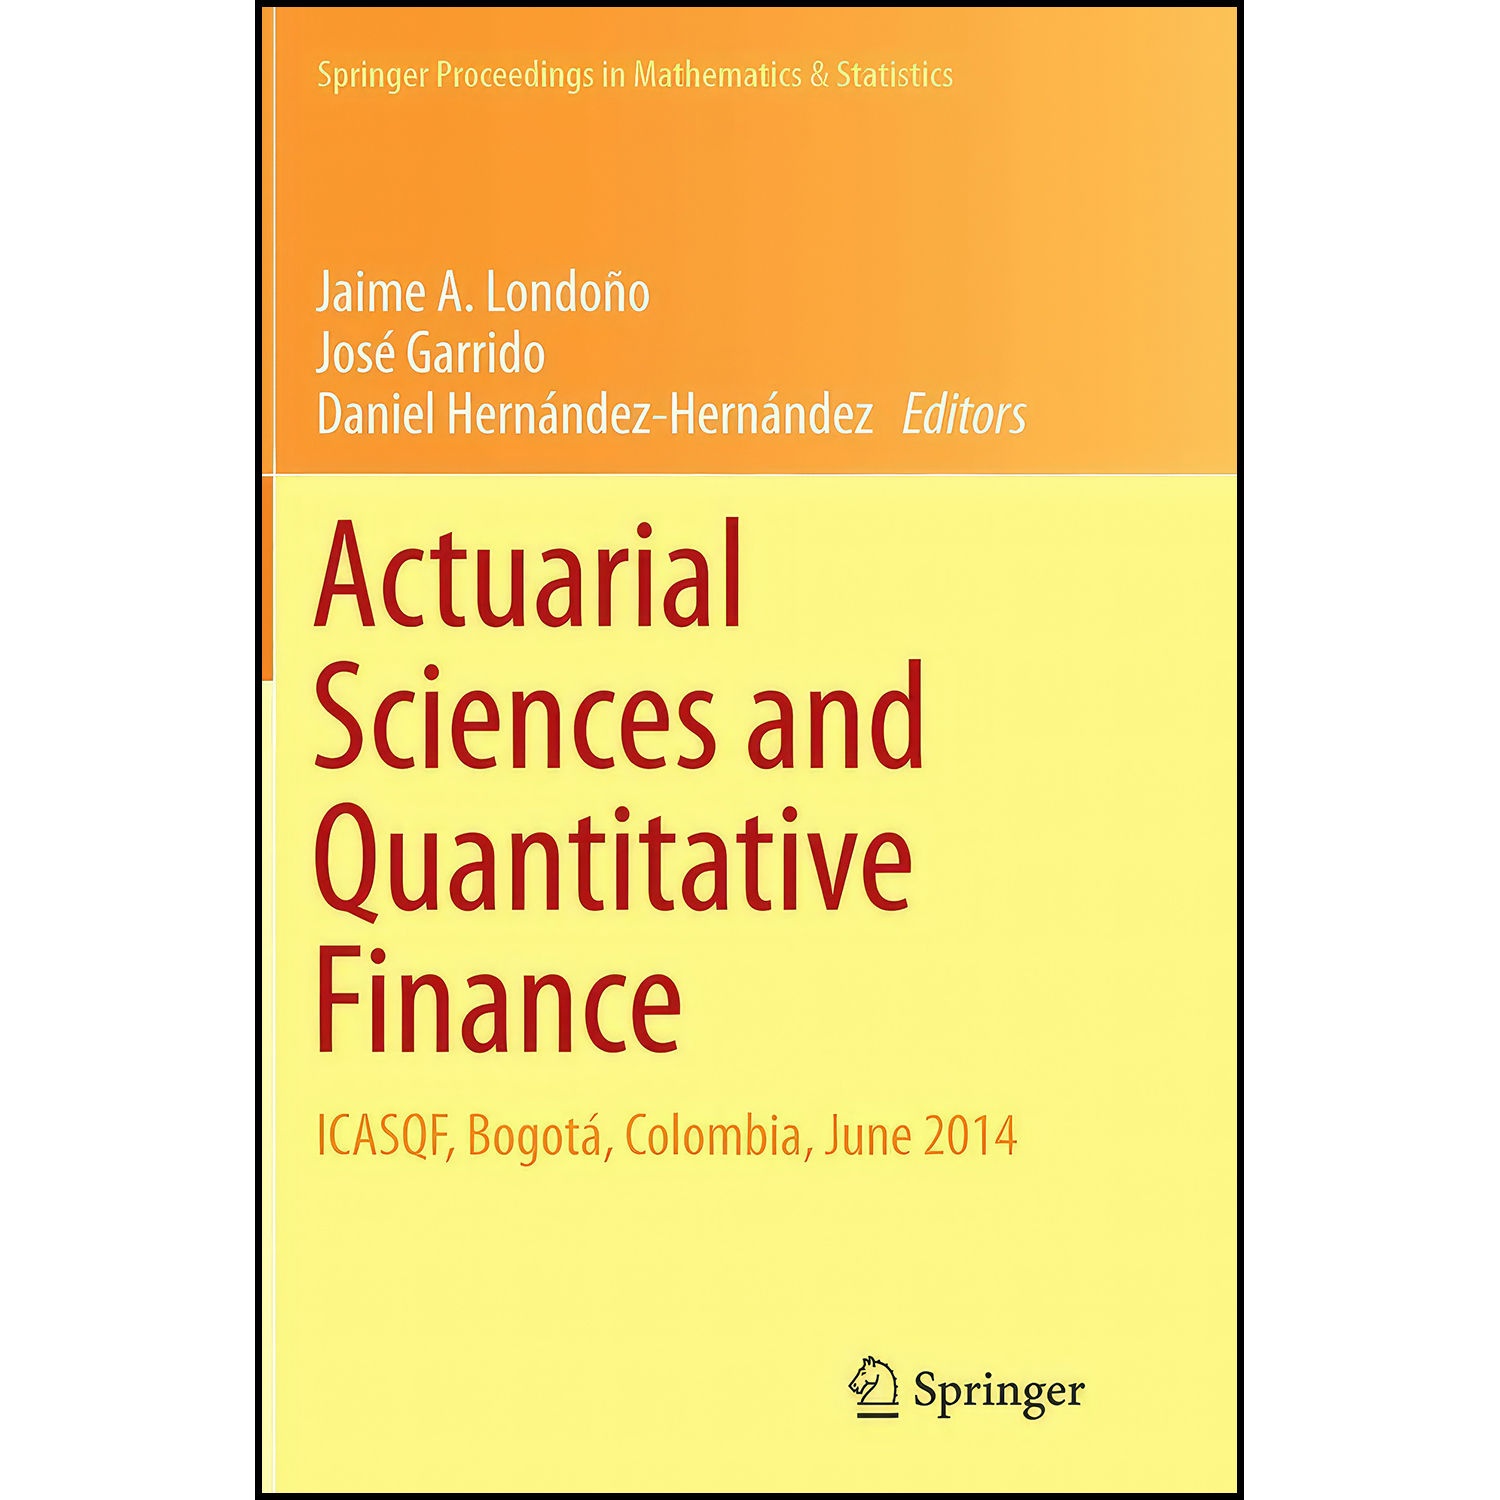 کتاب Actuarial Sciences and Quantitative Finance اثر جمعي از نويسندگان انتشارات Springer